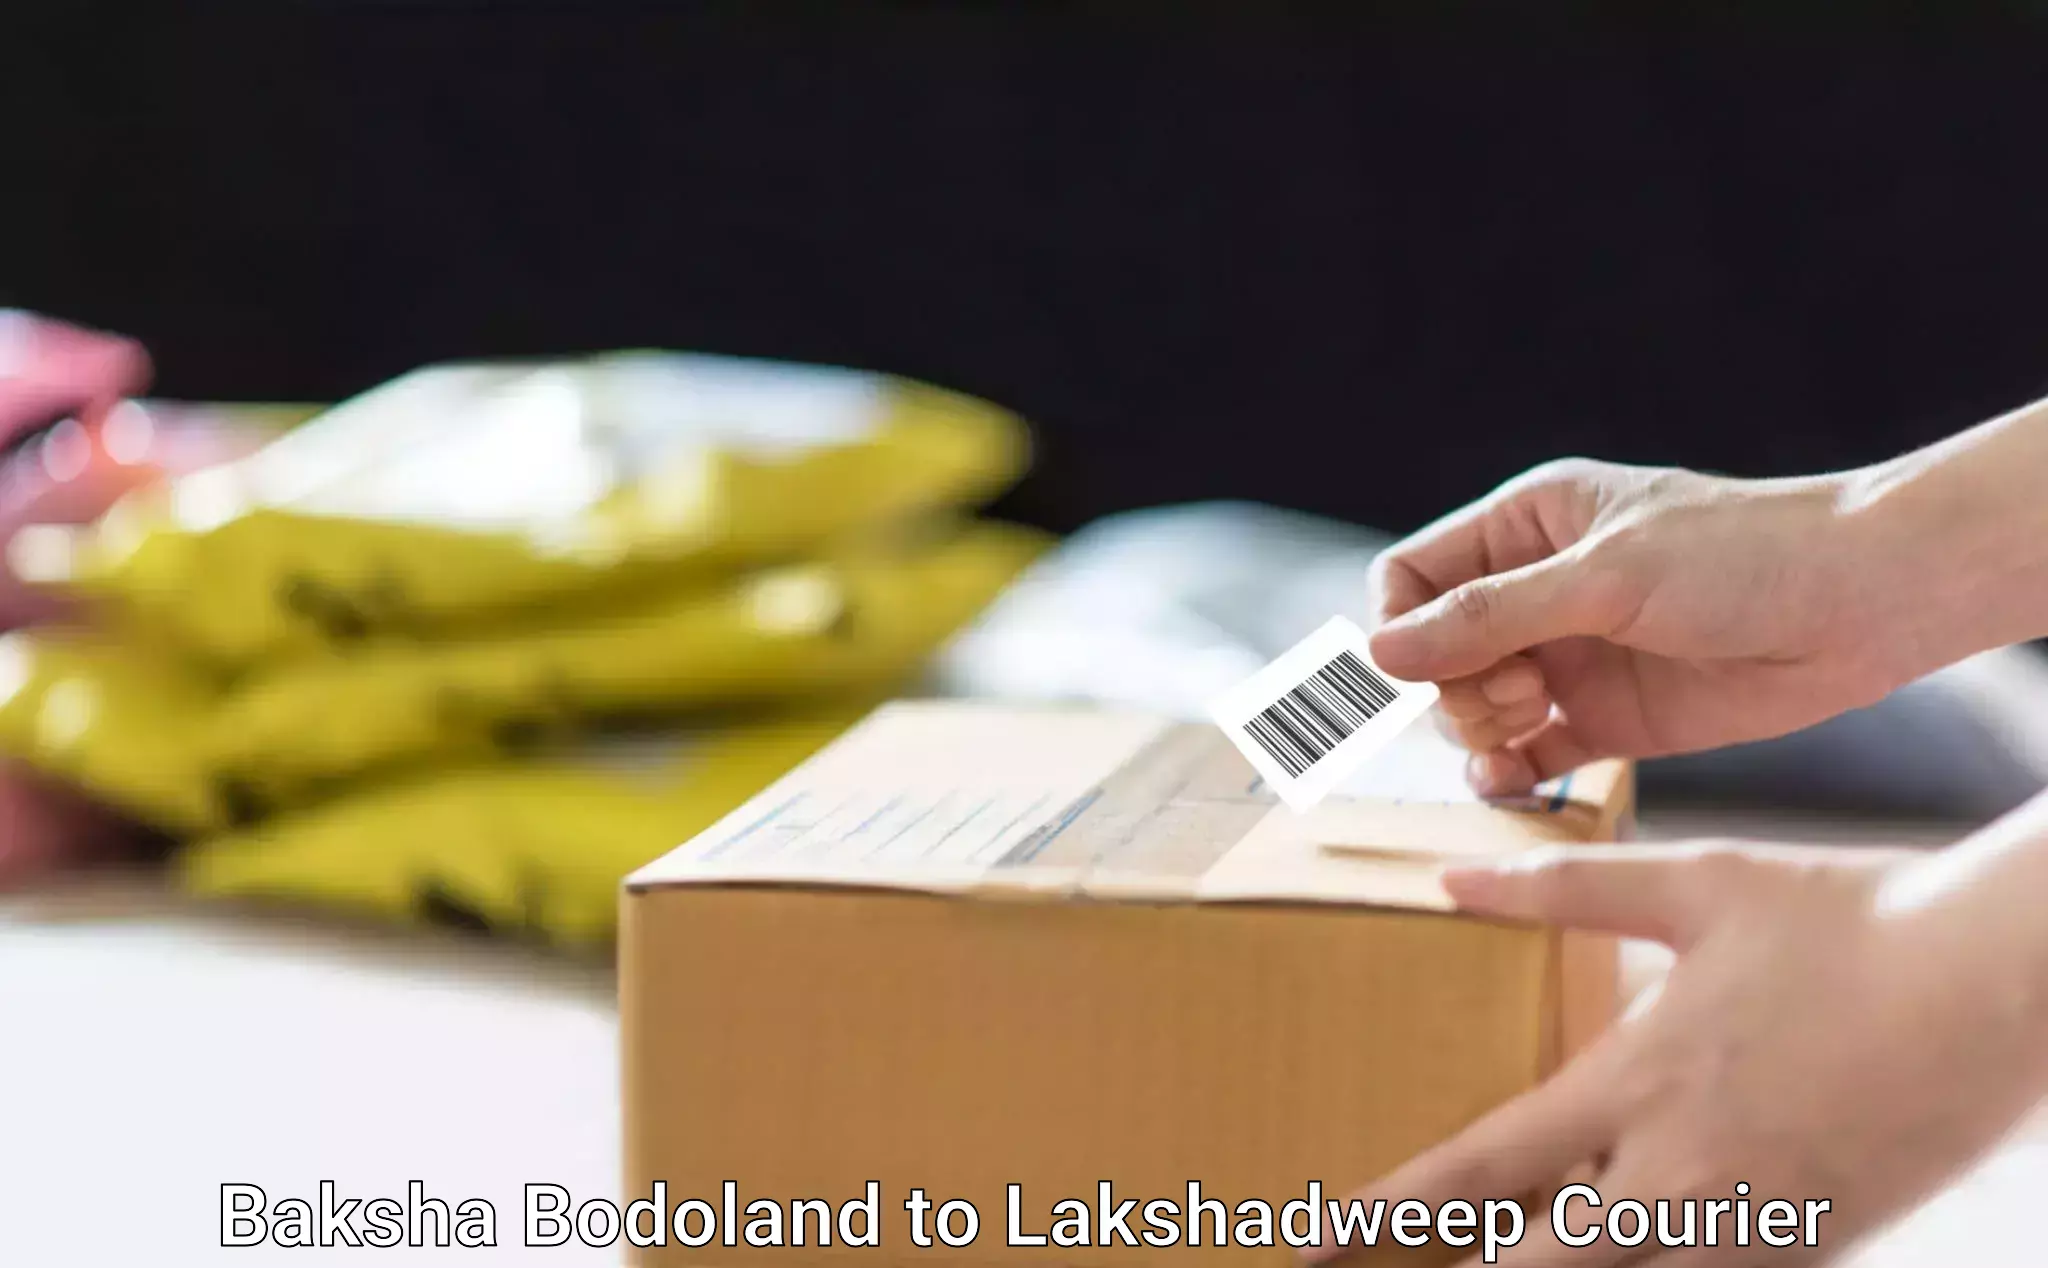 Courier tracking online Baksha Bodoland to Lakshadweep